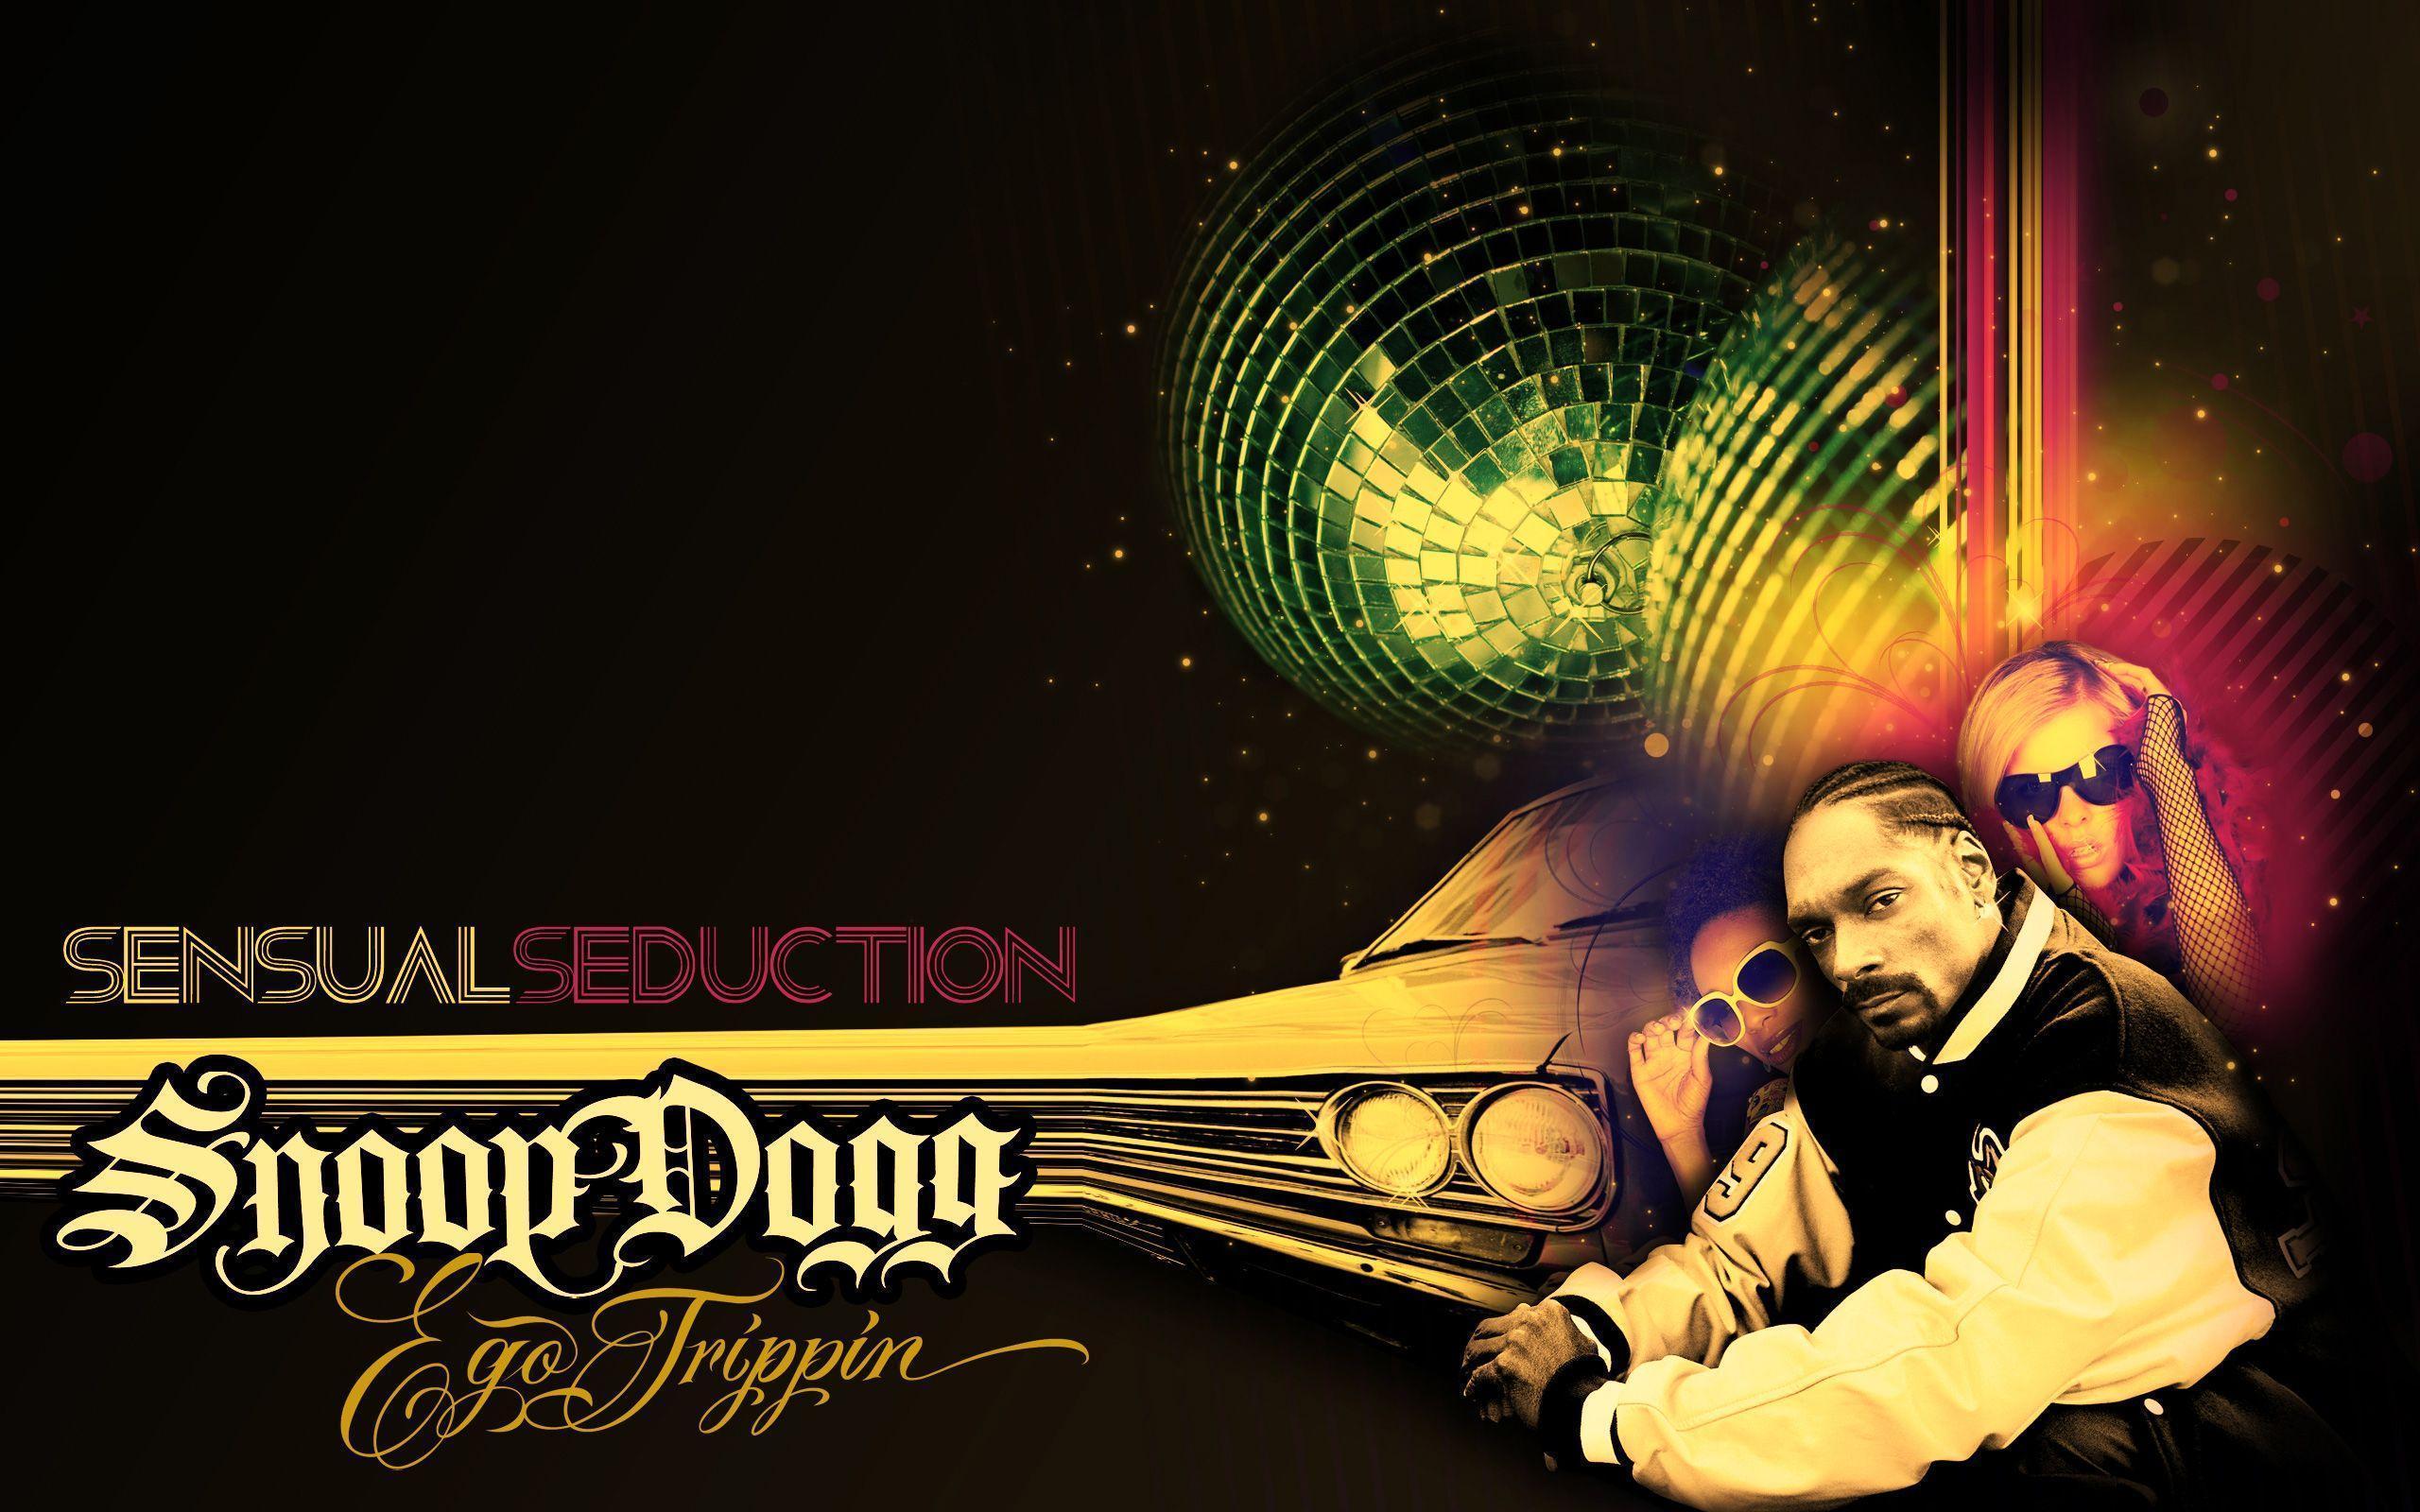 HD Snoop Dogg Wallpaper, Live Snoop Dogg Wallpaper (NAWWP)